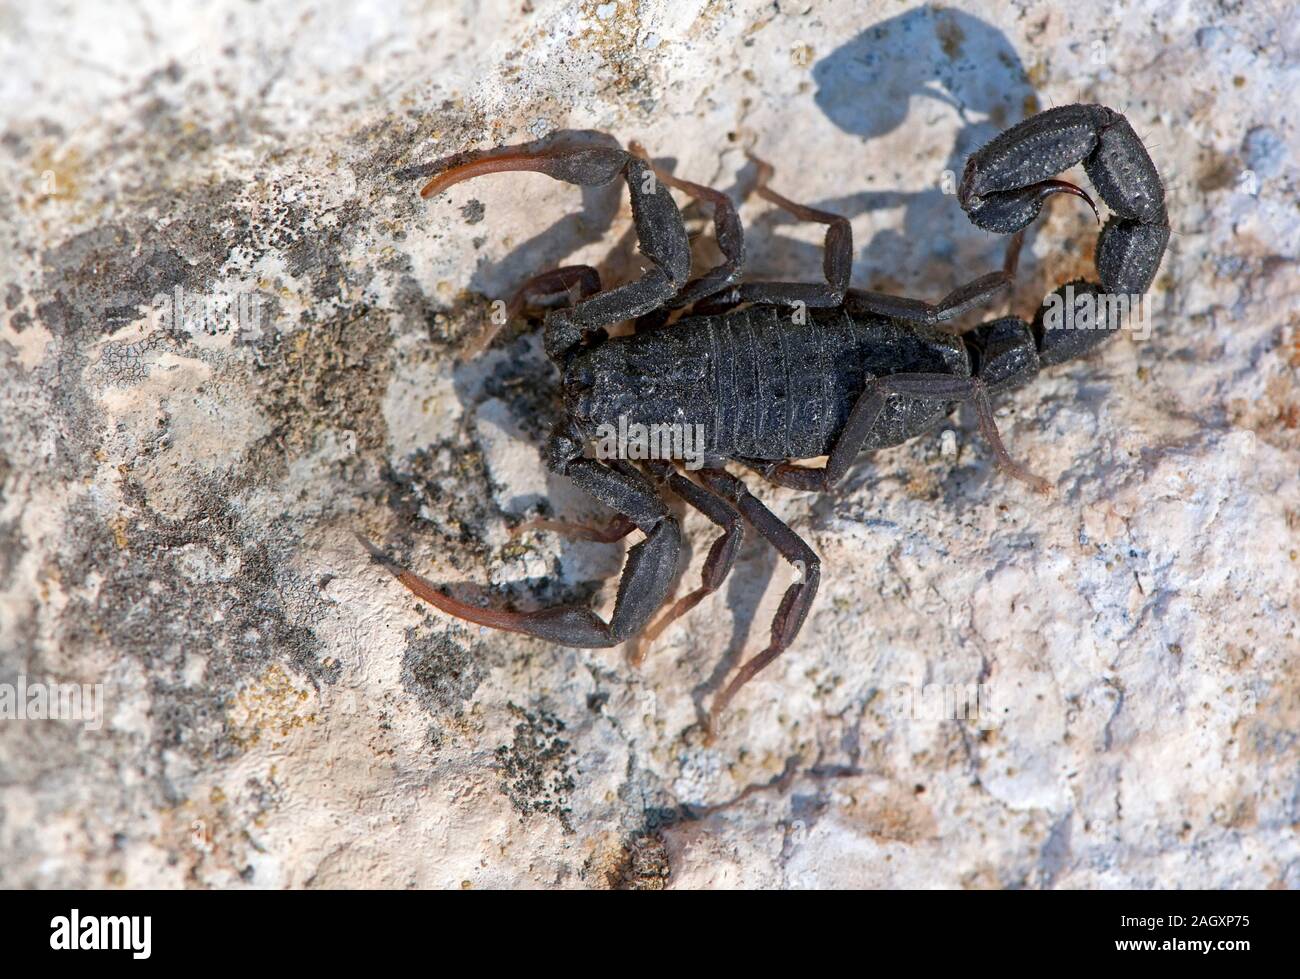 Black scorpion on a rock in the desert Stock Photo